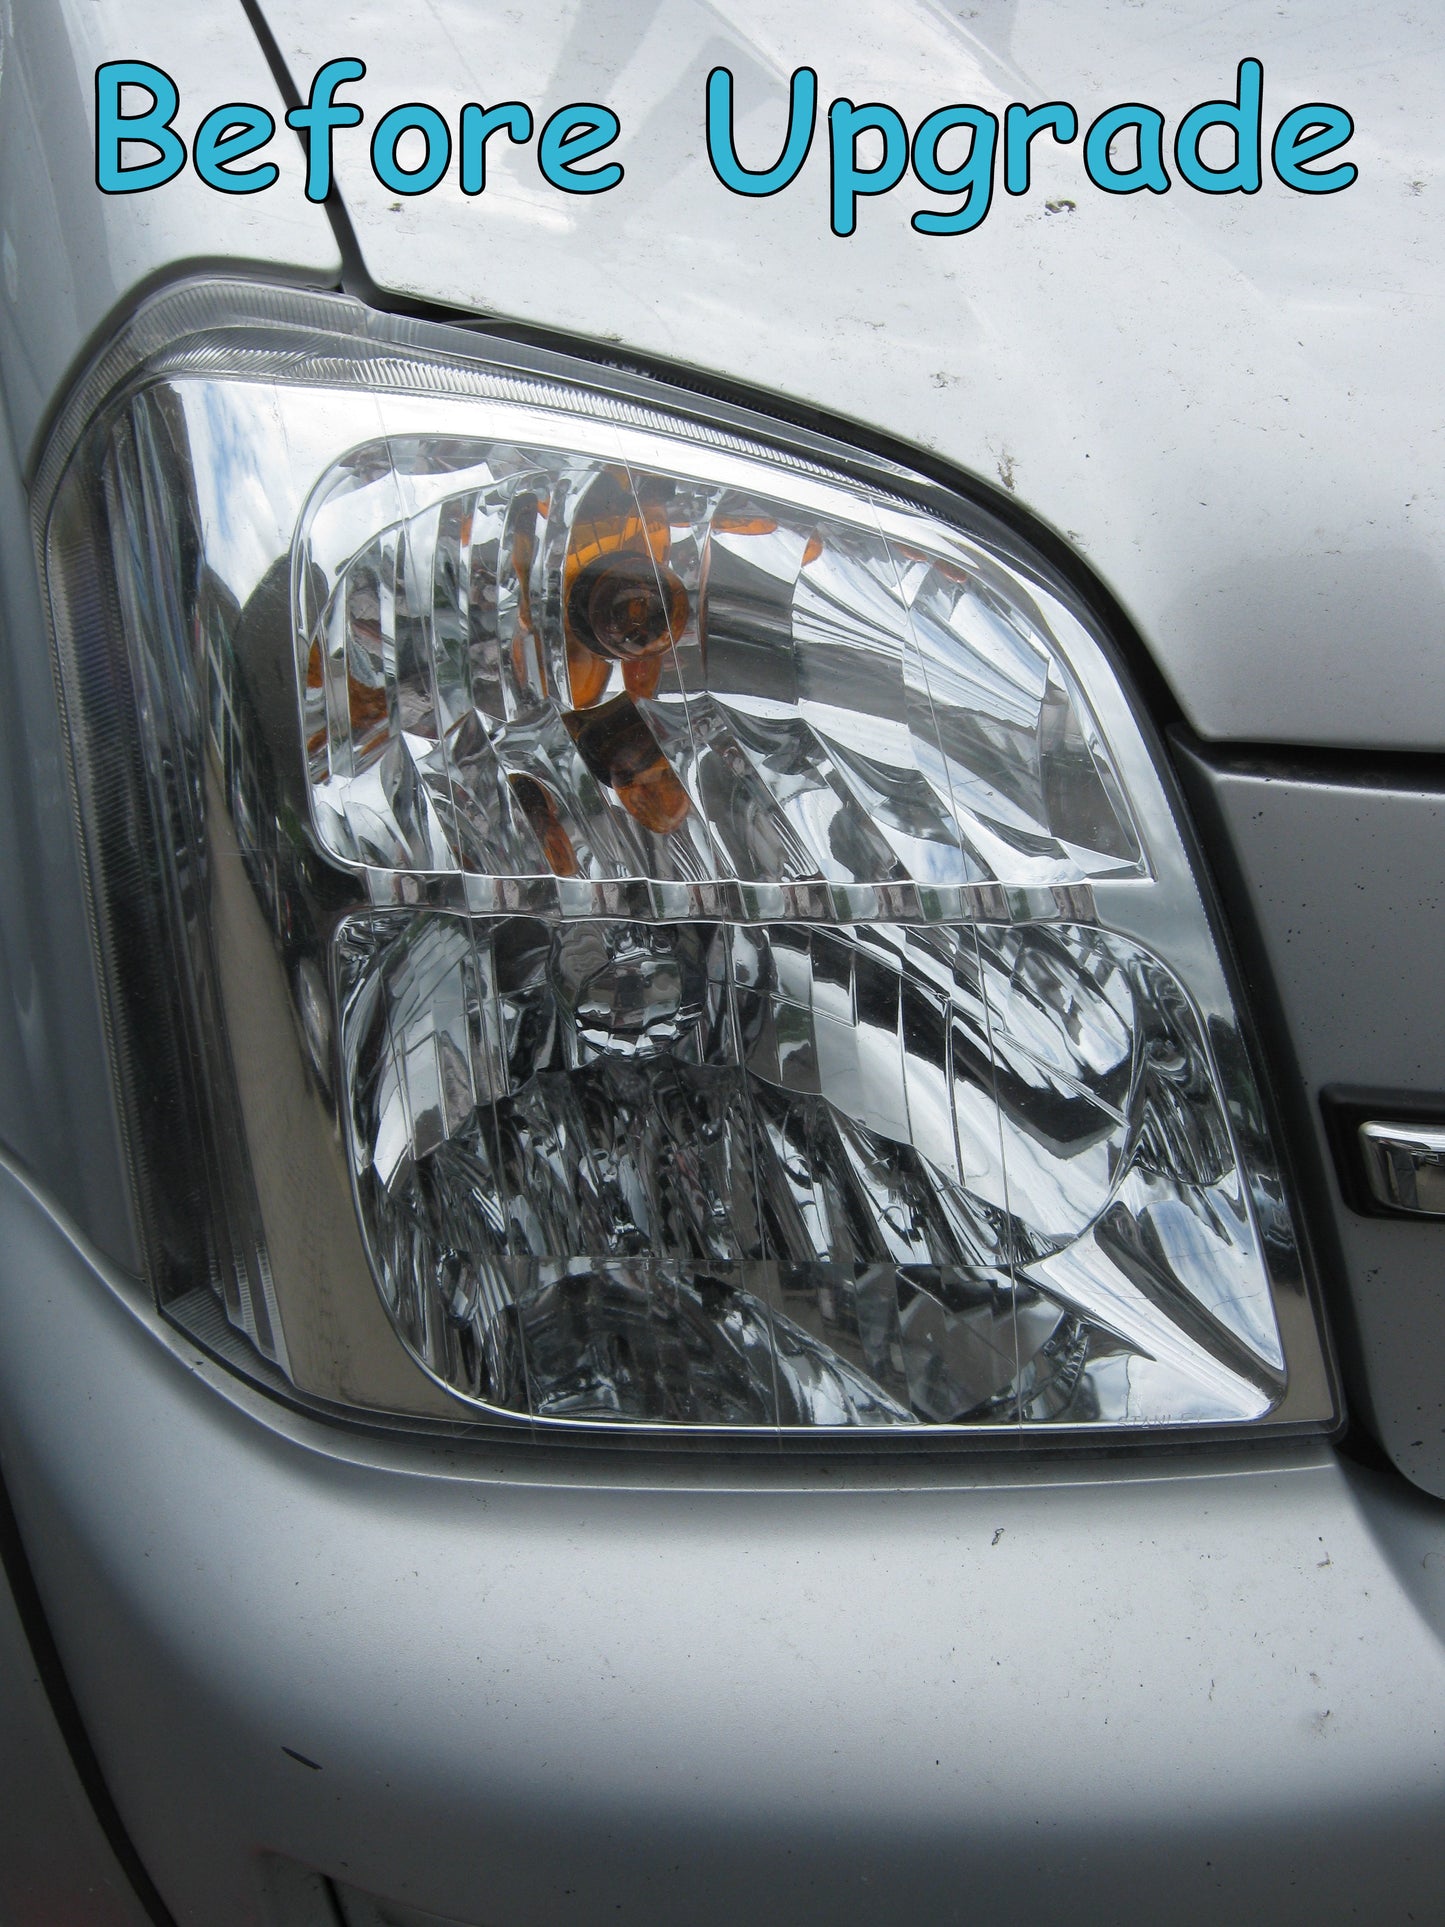 Isuzu DMax Rodeo Indicator bulbs for headlight -Chrome